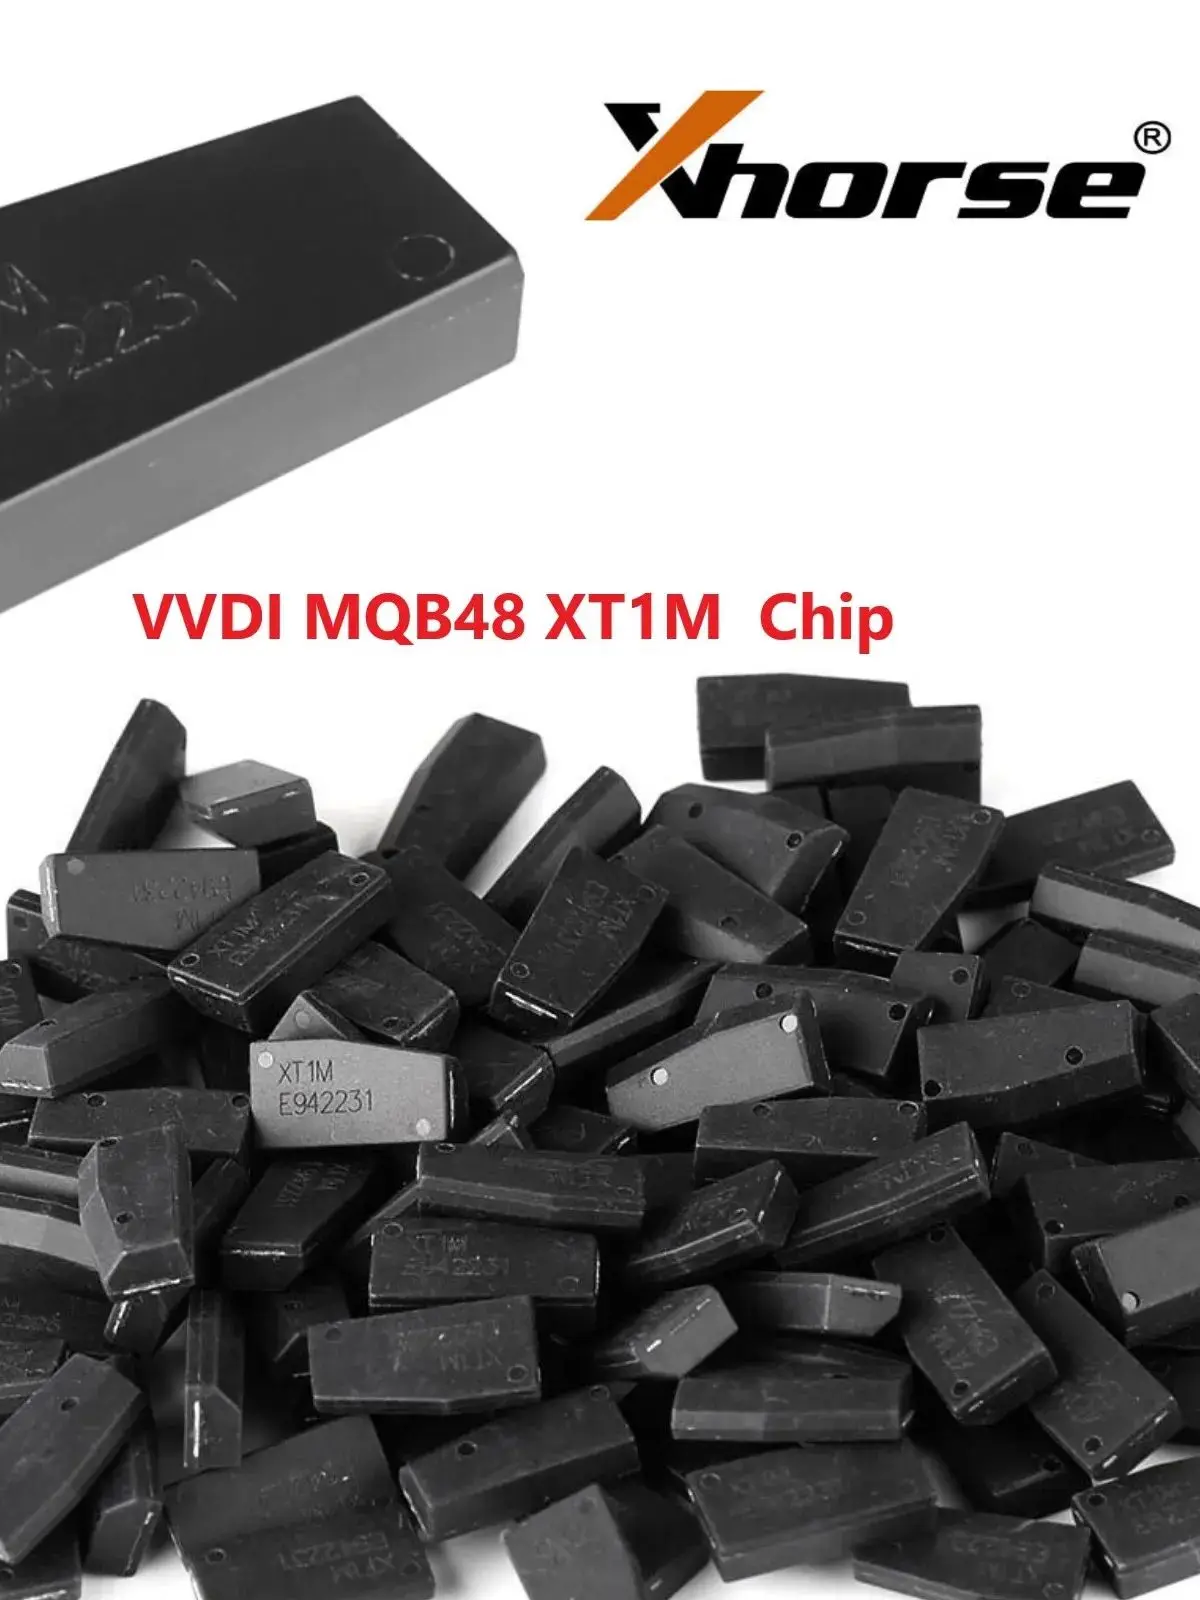 

5pcs Xhorse VVDI MQB48 XT1M Megamos AES MQB 48 Unlocked Chip for VW/Volkswagen/Fiat/Audi Car Key MQB Chip